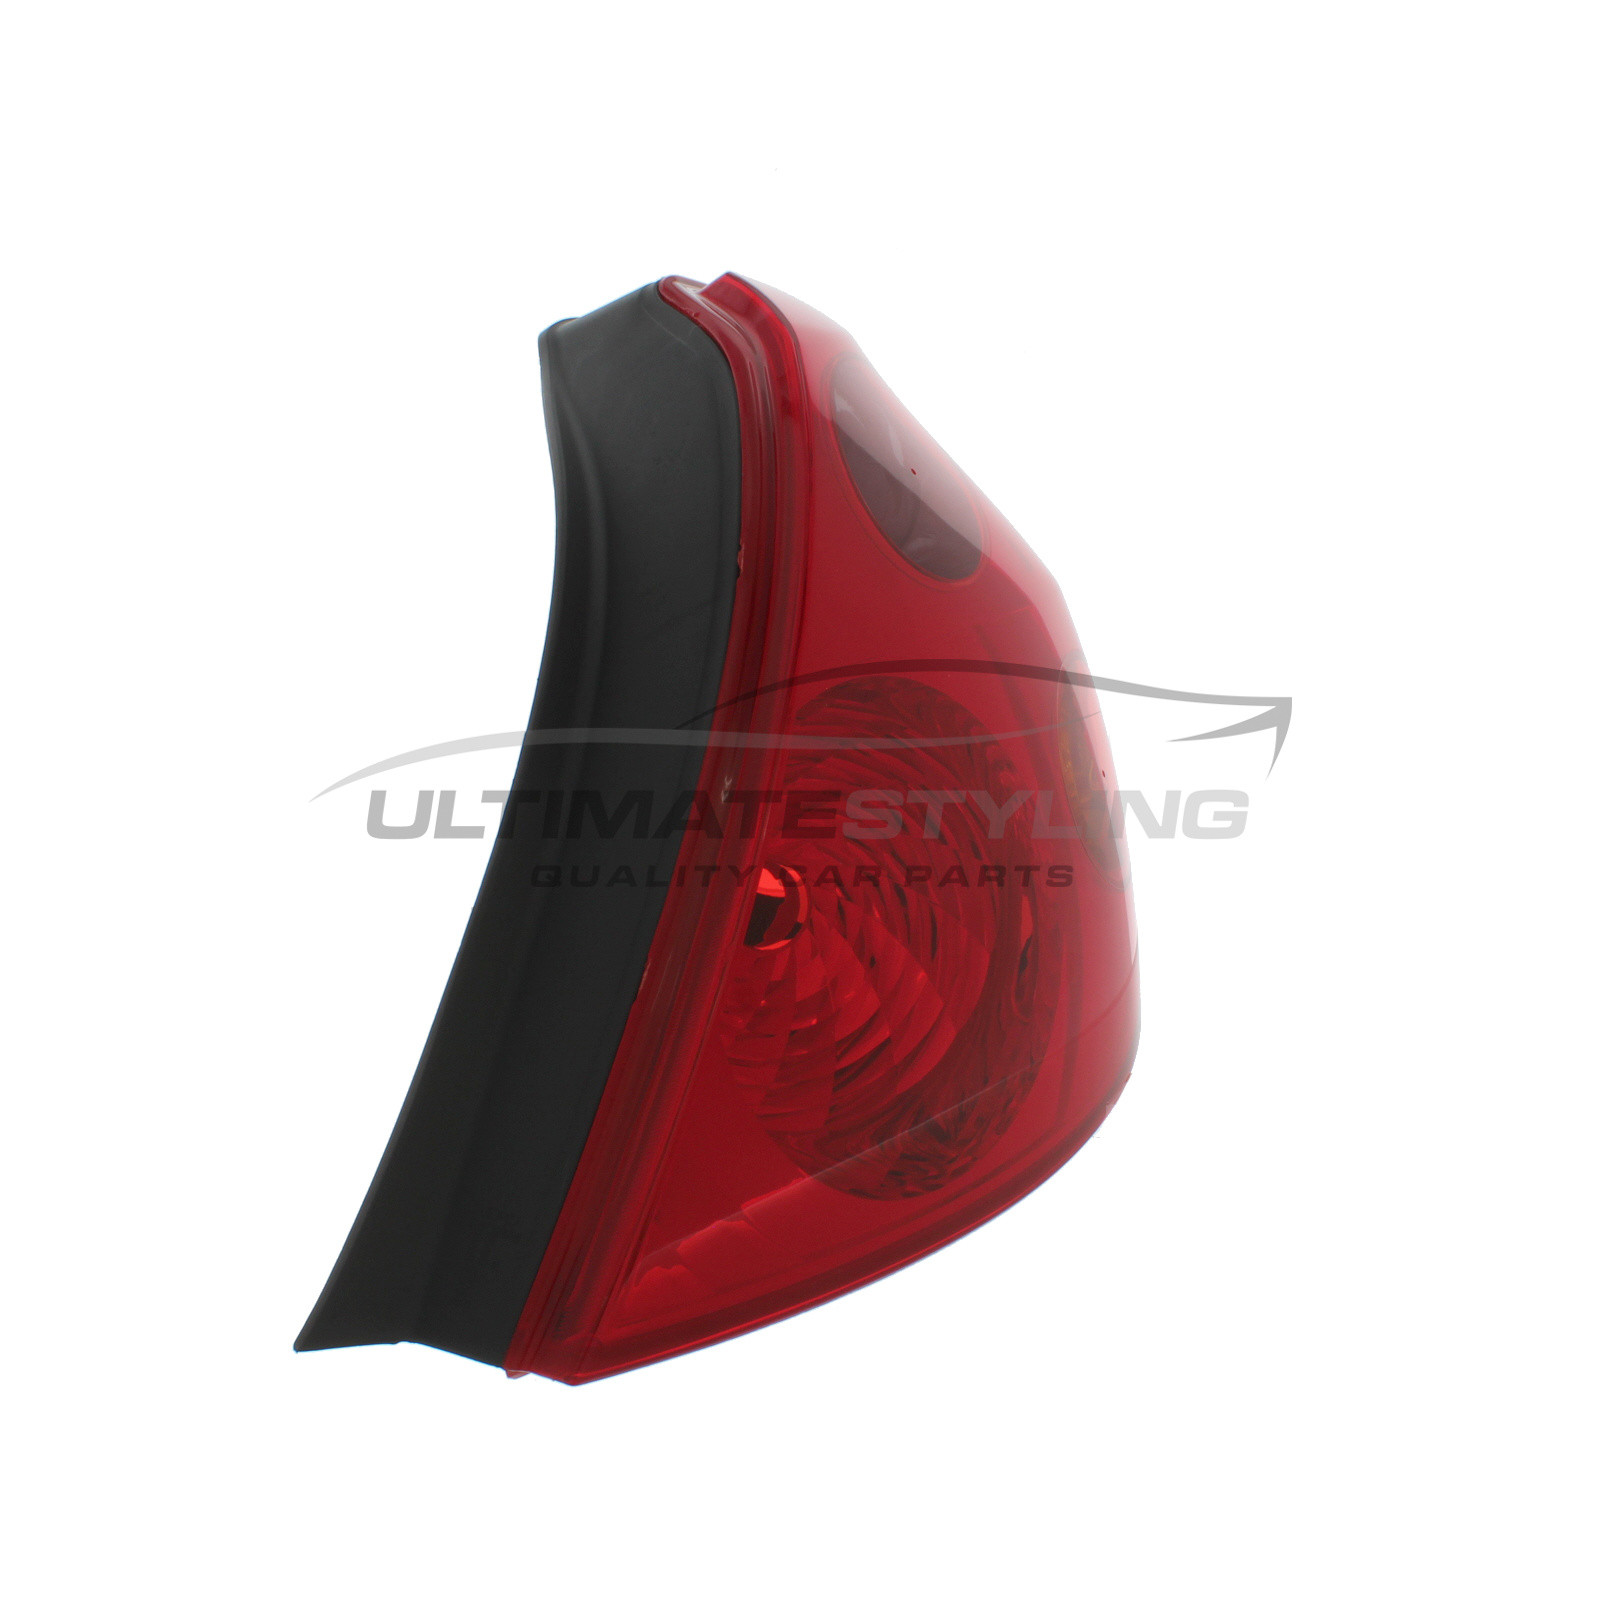 Kia Ceed Rear Light Tail Light Drivers Side (RH), Rear Non-LED